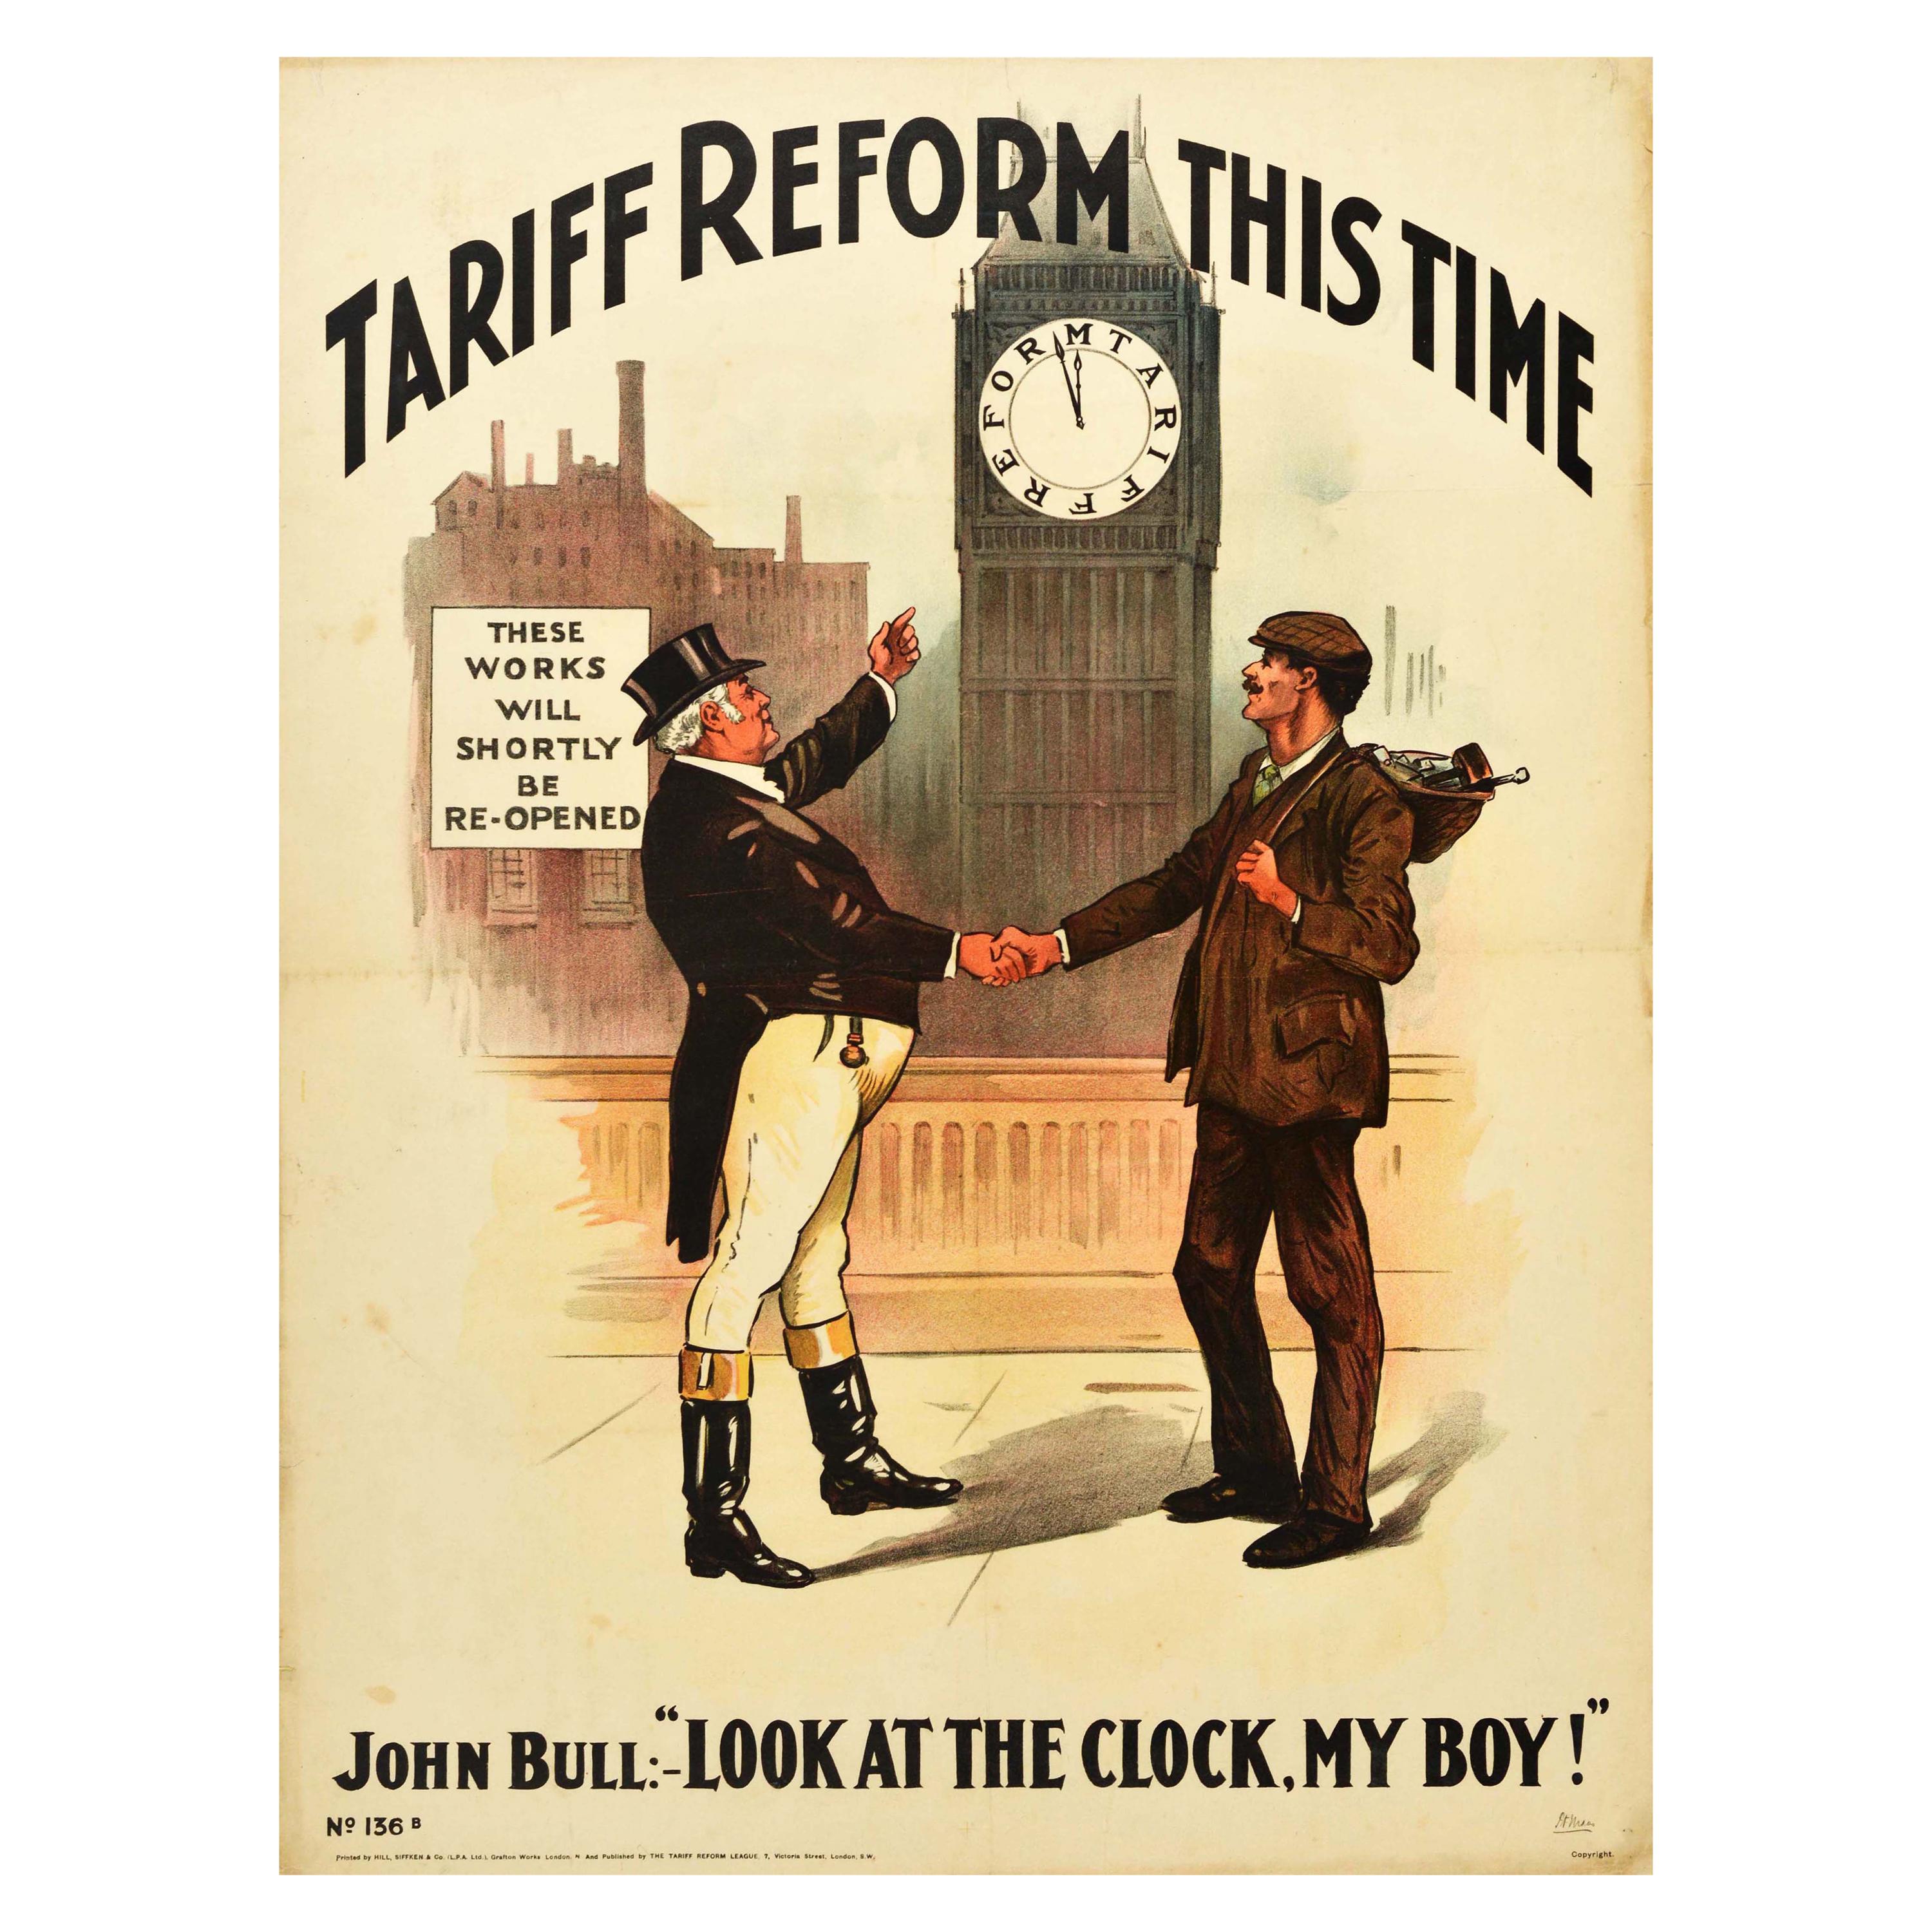 Original Antikes politisches Poster „This Time Clock“ Tarifreform, John Bull Design